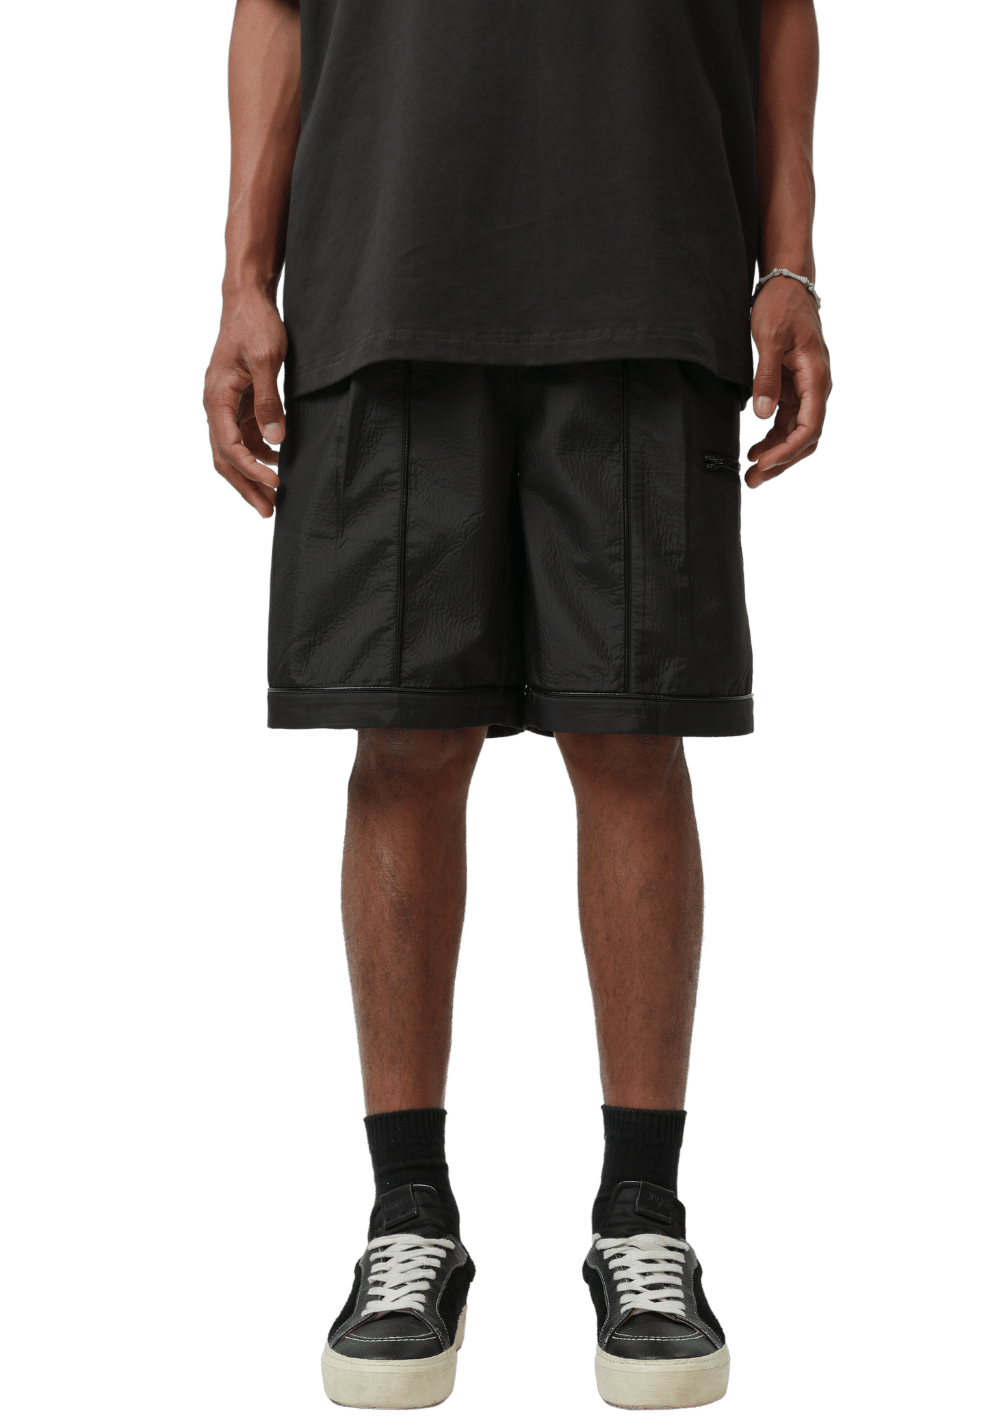 Composite Fabric Zipper Shorts - PSYLOS 1, Composite Fabric Zipper Shorts, Shorts, Boneless, PSYLOS 1